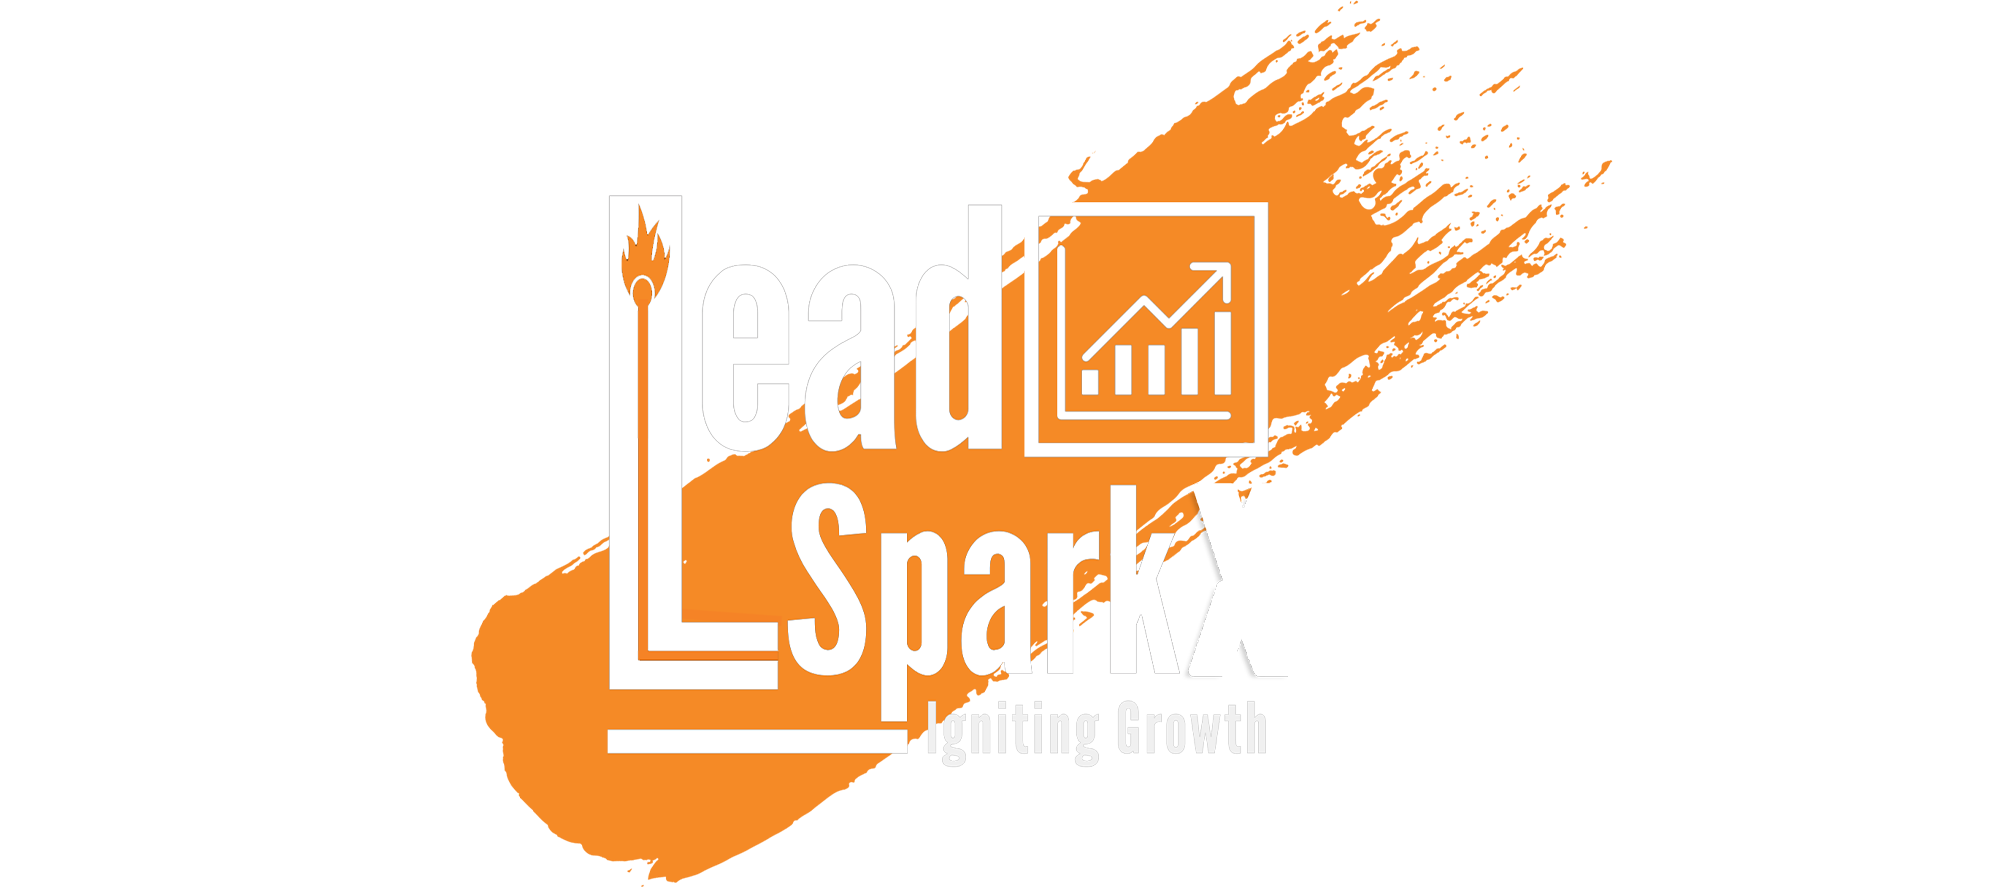 Lead SparkX logo